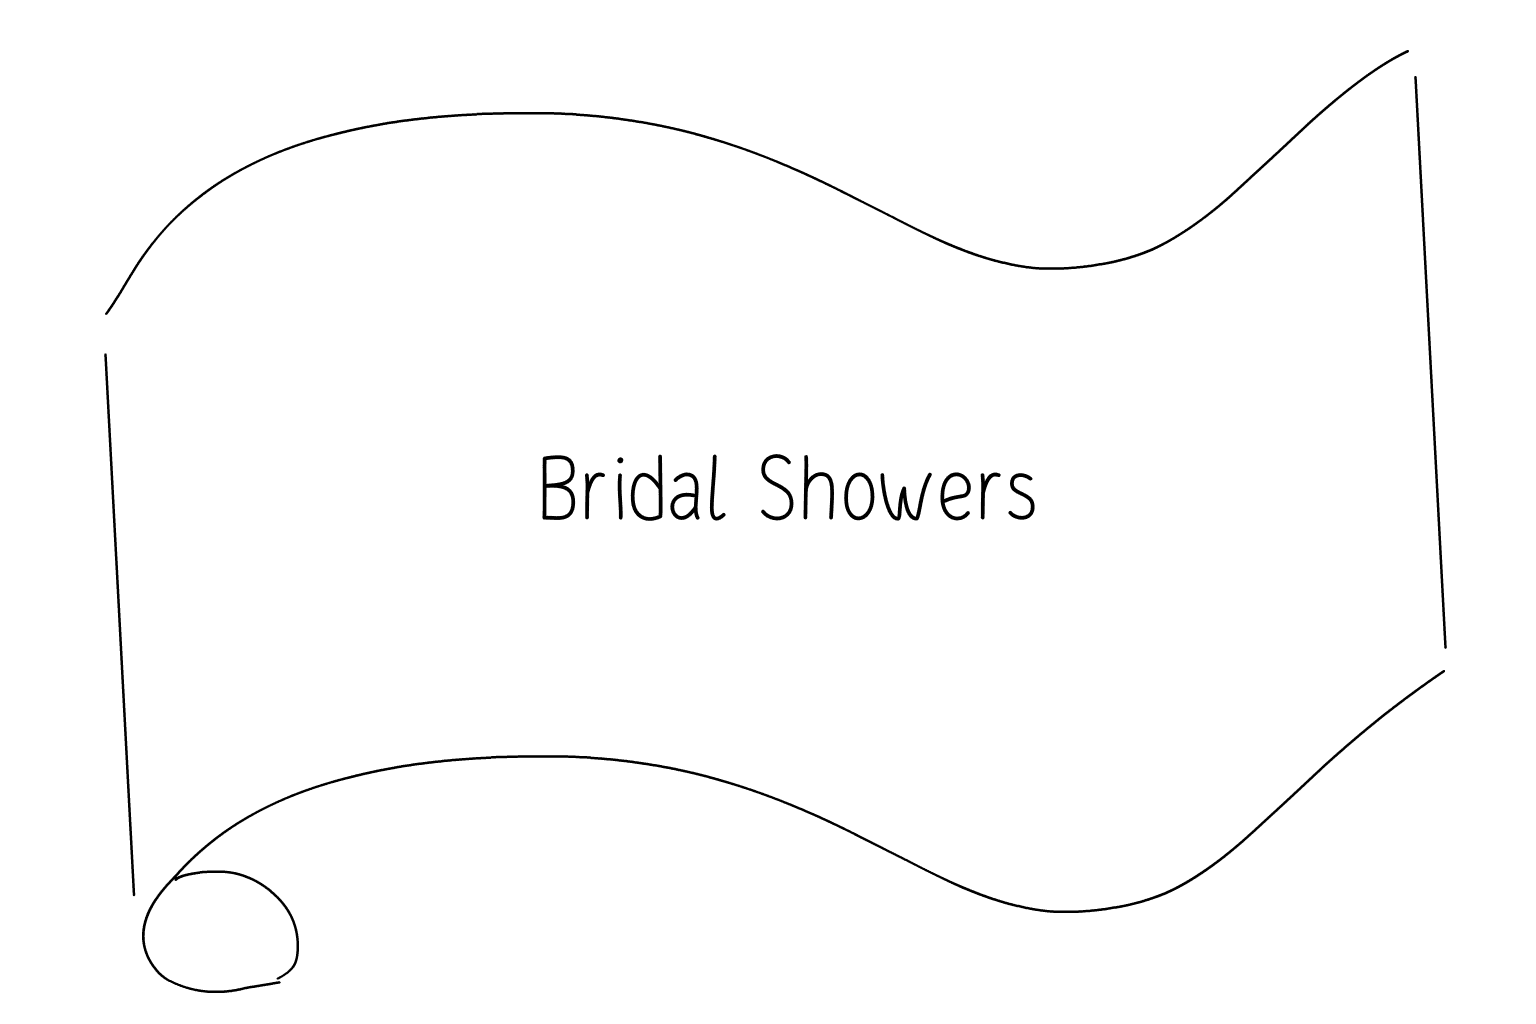 Illustration of Wedding and Bridal Shower